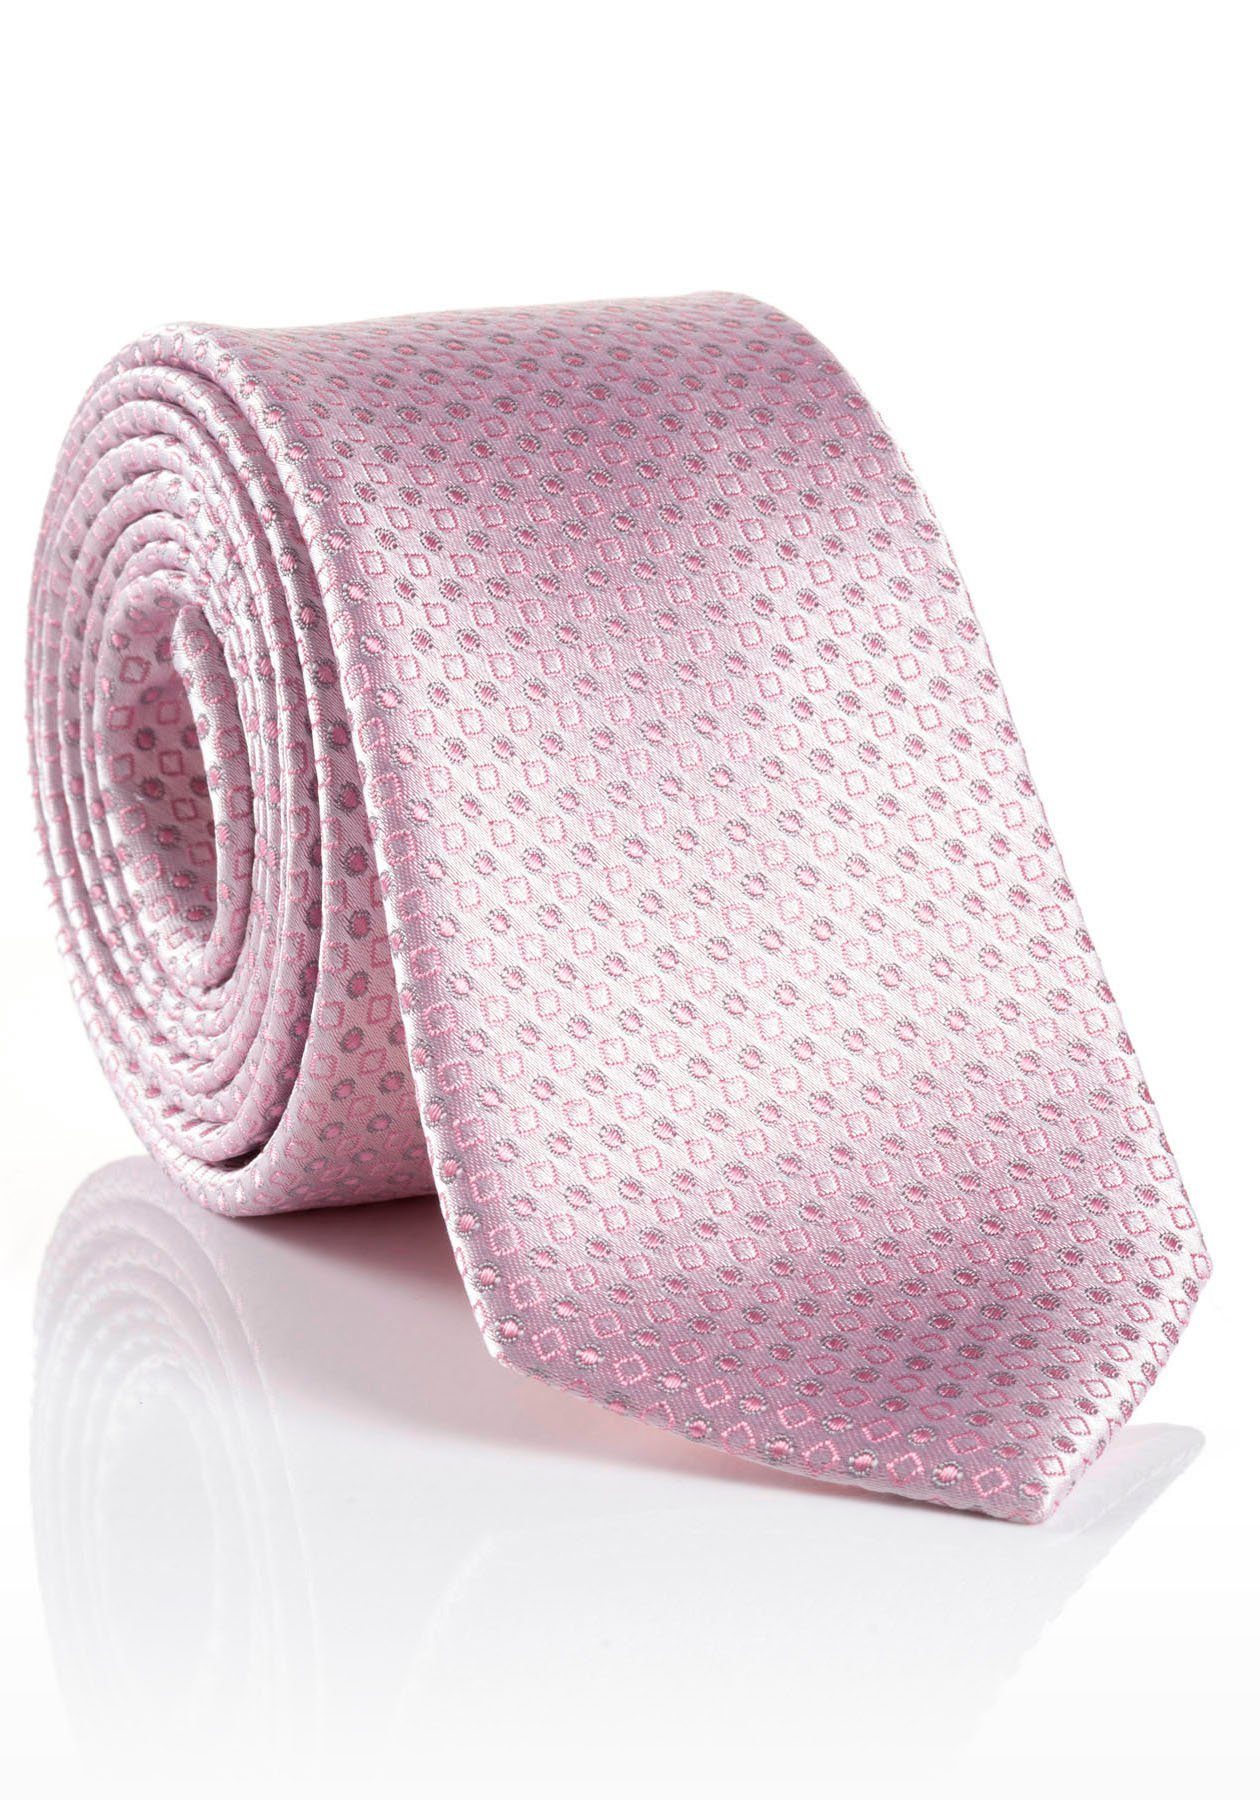 LEANO MONTI Krawatte Seide, reiner Krawatte aus Minimal-Design,Pastellfarben